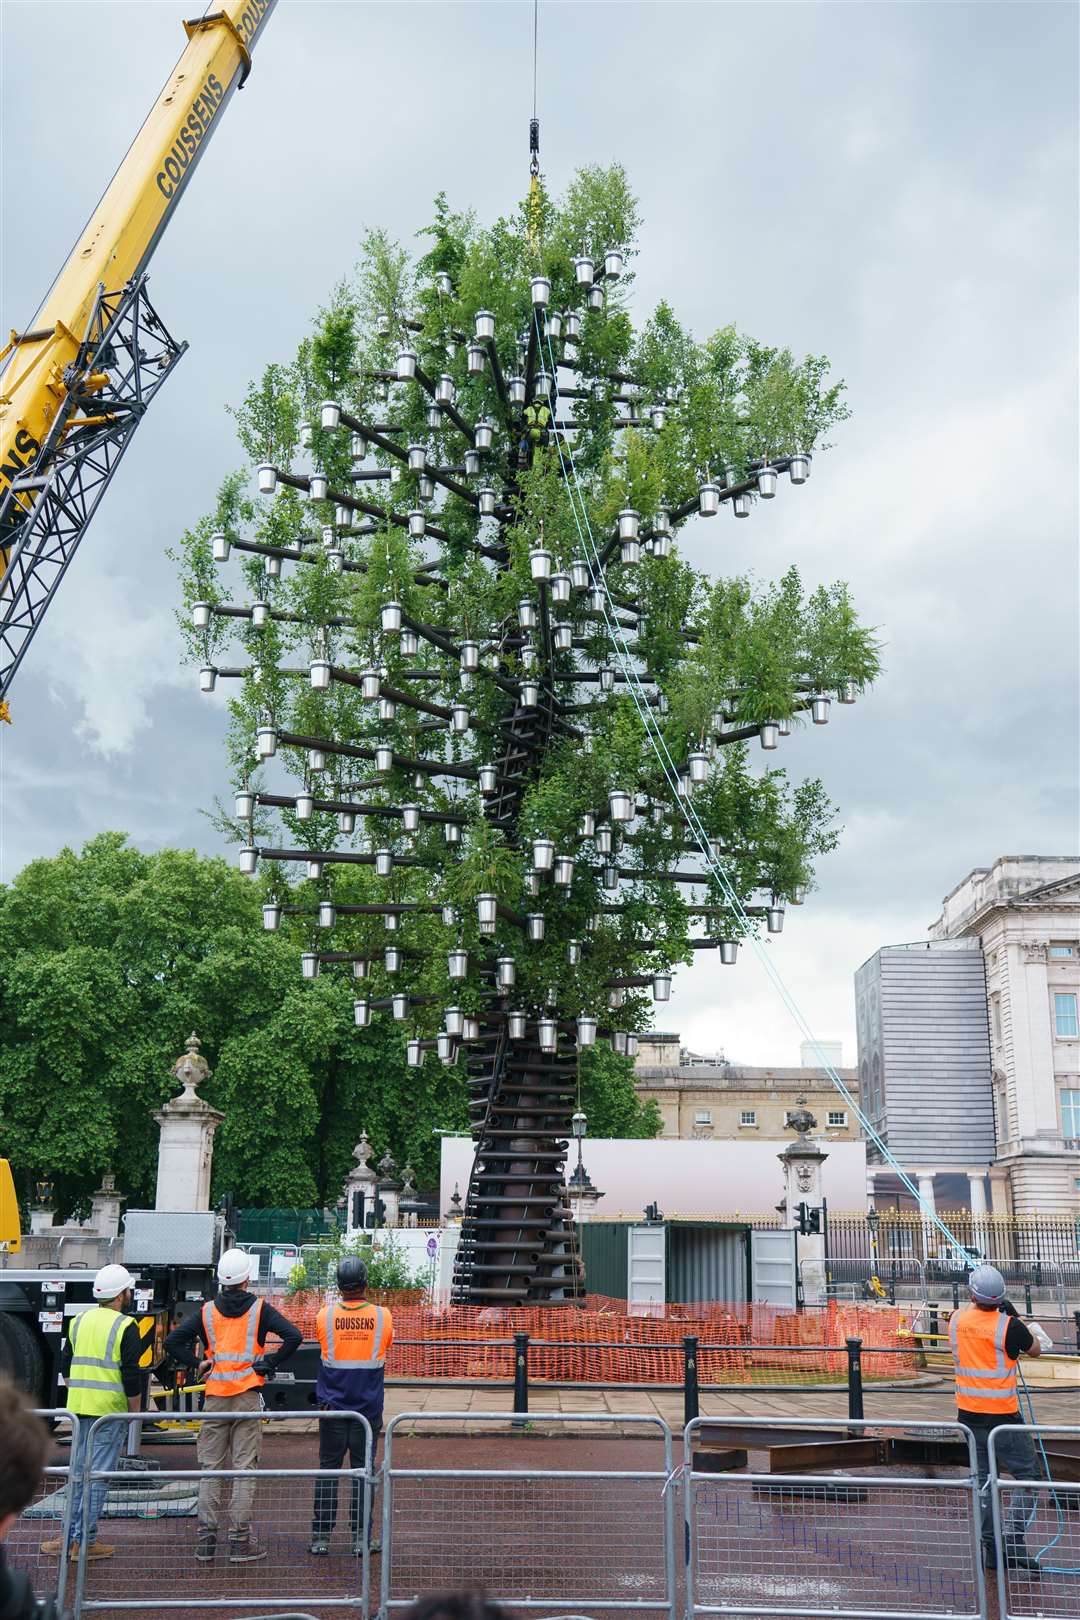 The Queen’s Green Canopy (QGC) Tree of Trees beacon (Dominic Lipinski/PA)